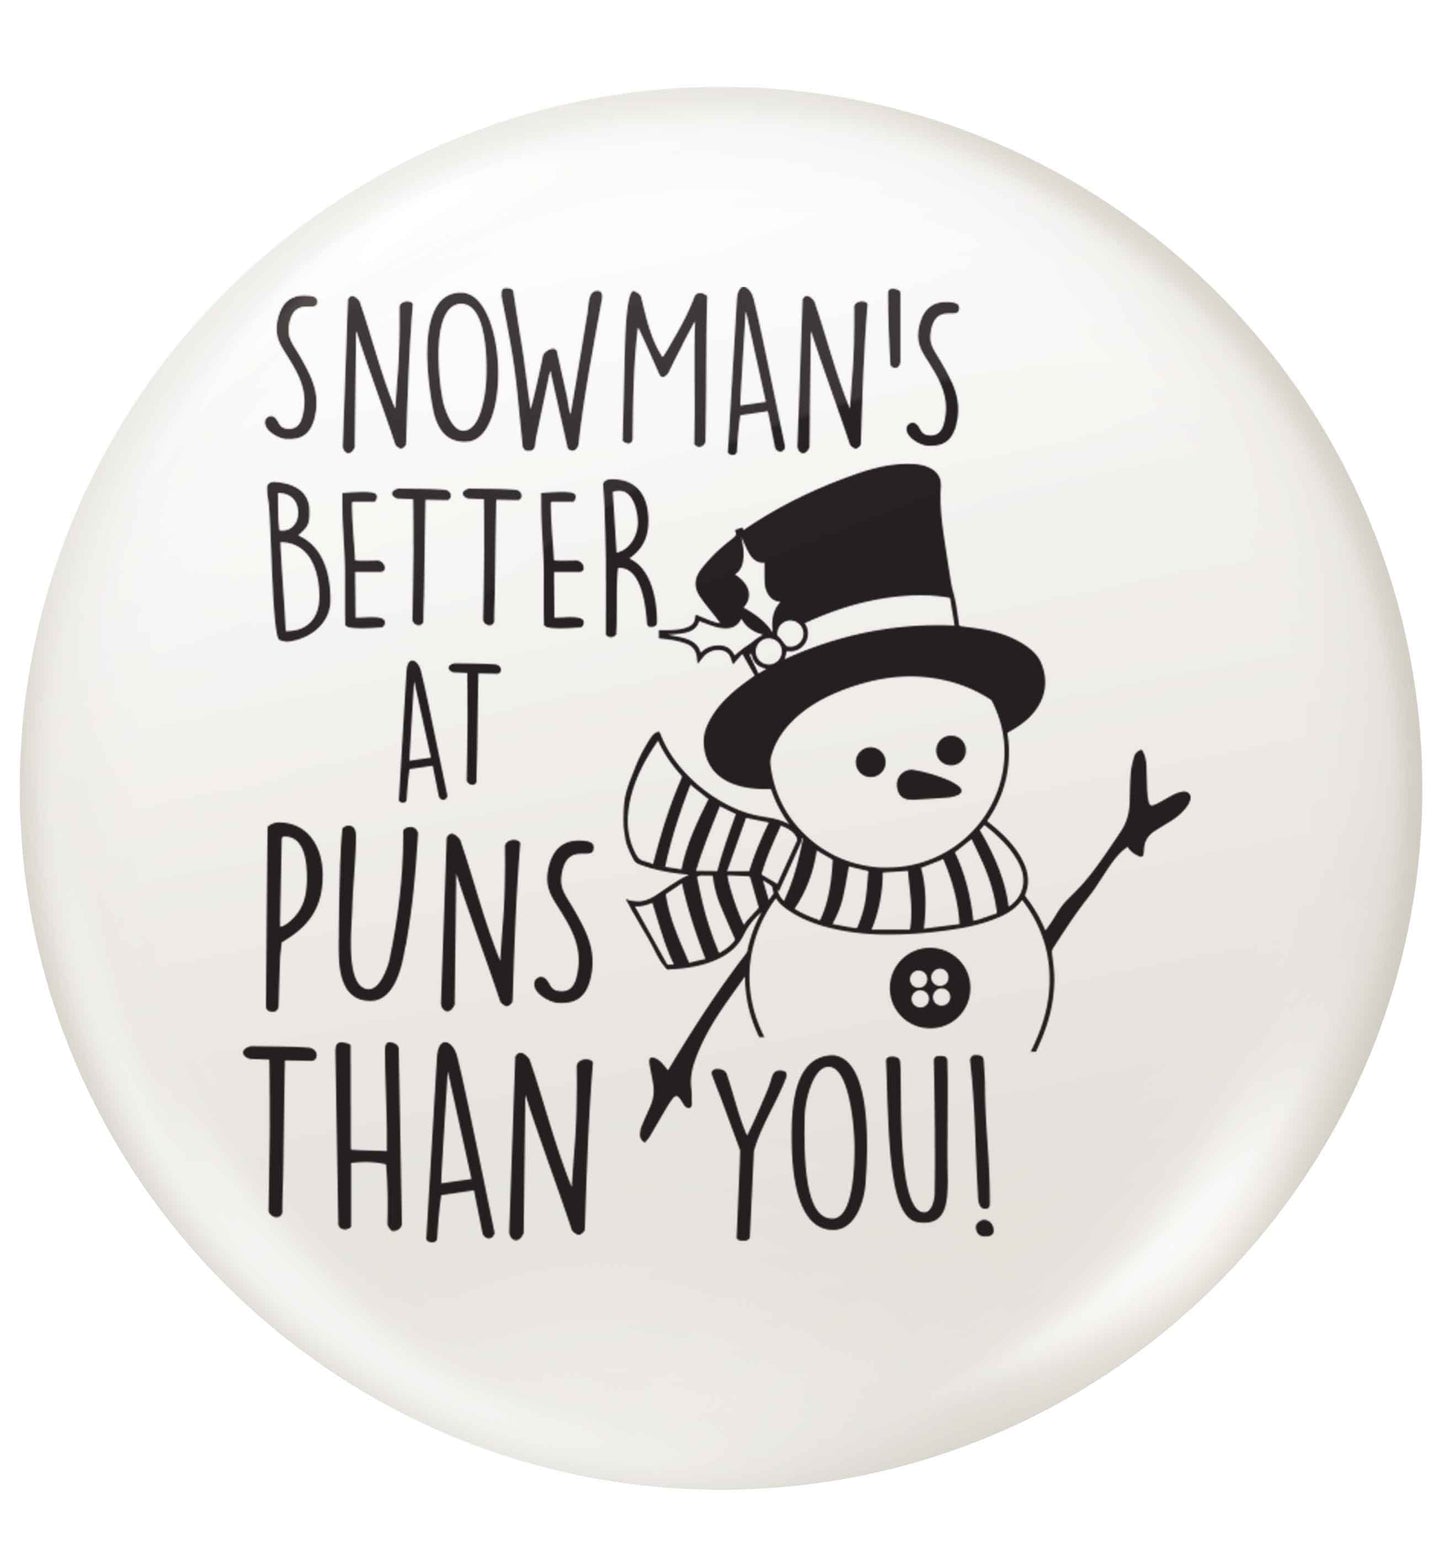 Snowman's Puns You small 25mm Pin badge